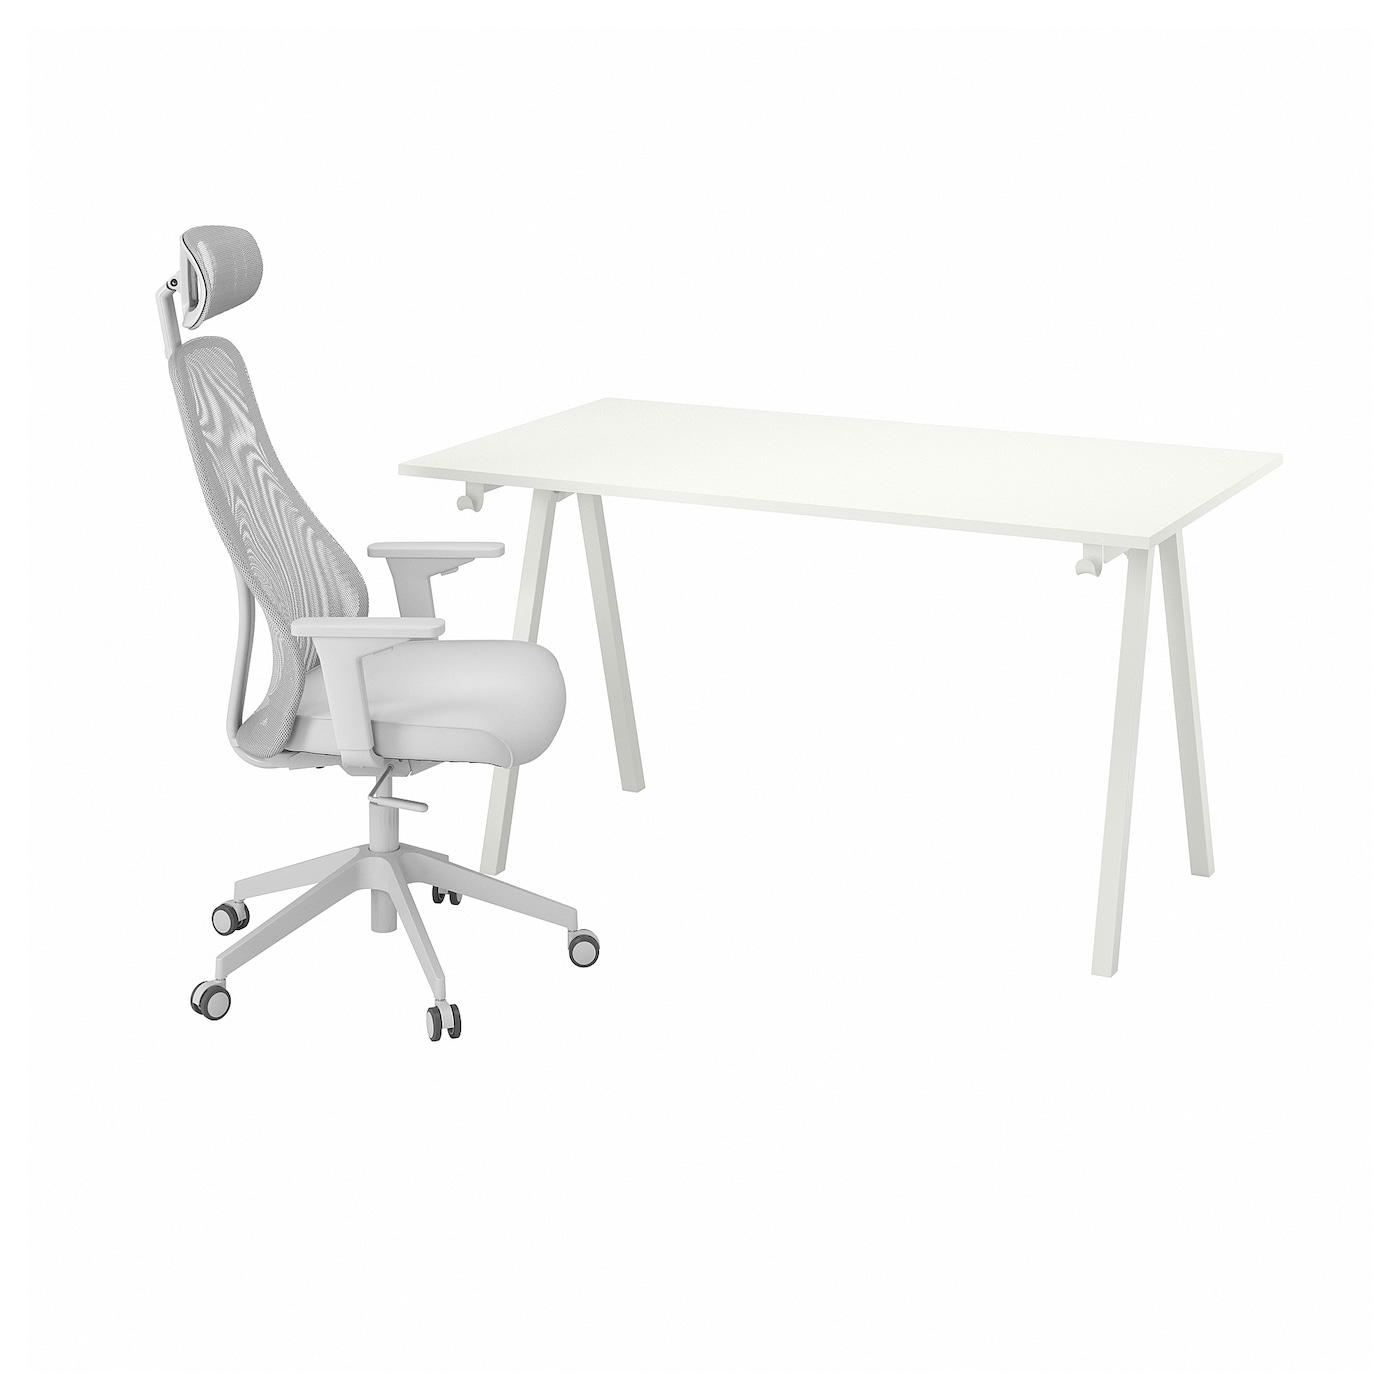 Стол и стул - IKEA TROTTEN / MATCHSPEL, белый/светло-серый, ТРОТТЕН/МАТЧСПЕЛ ИКЕА